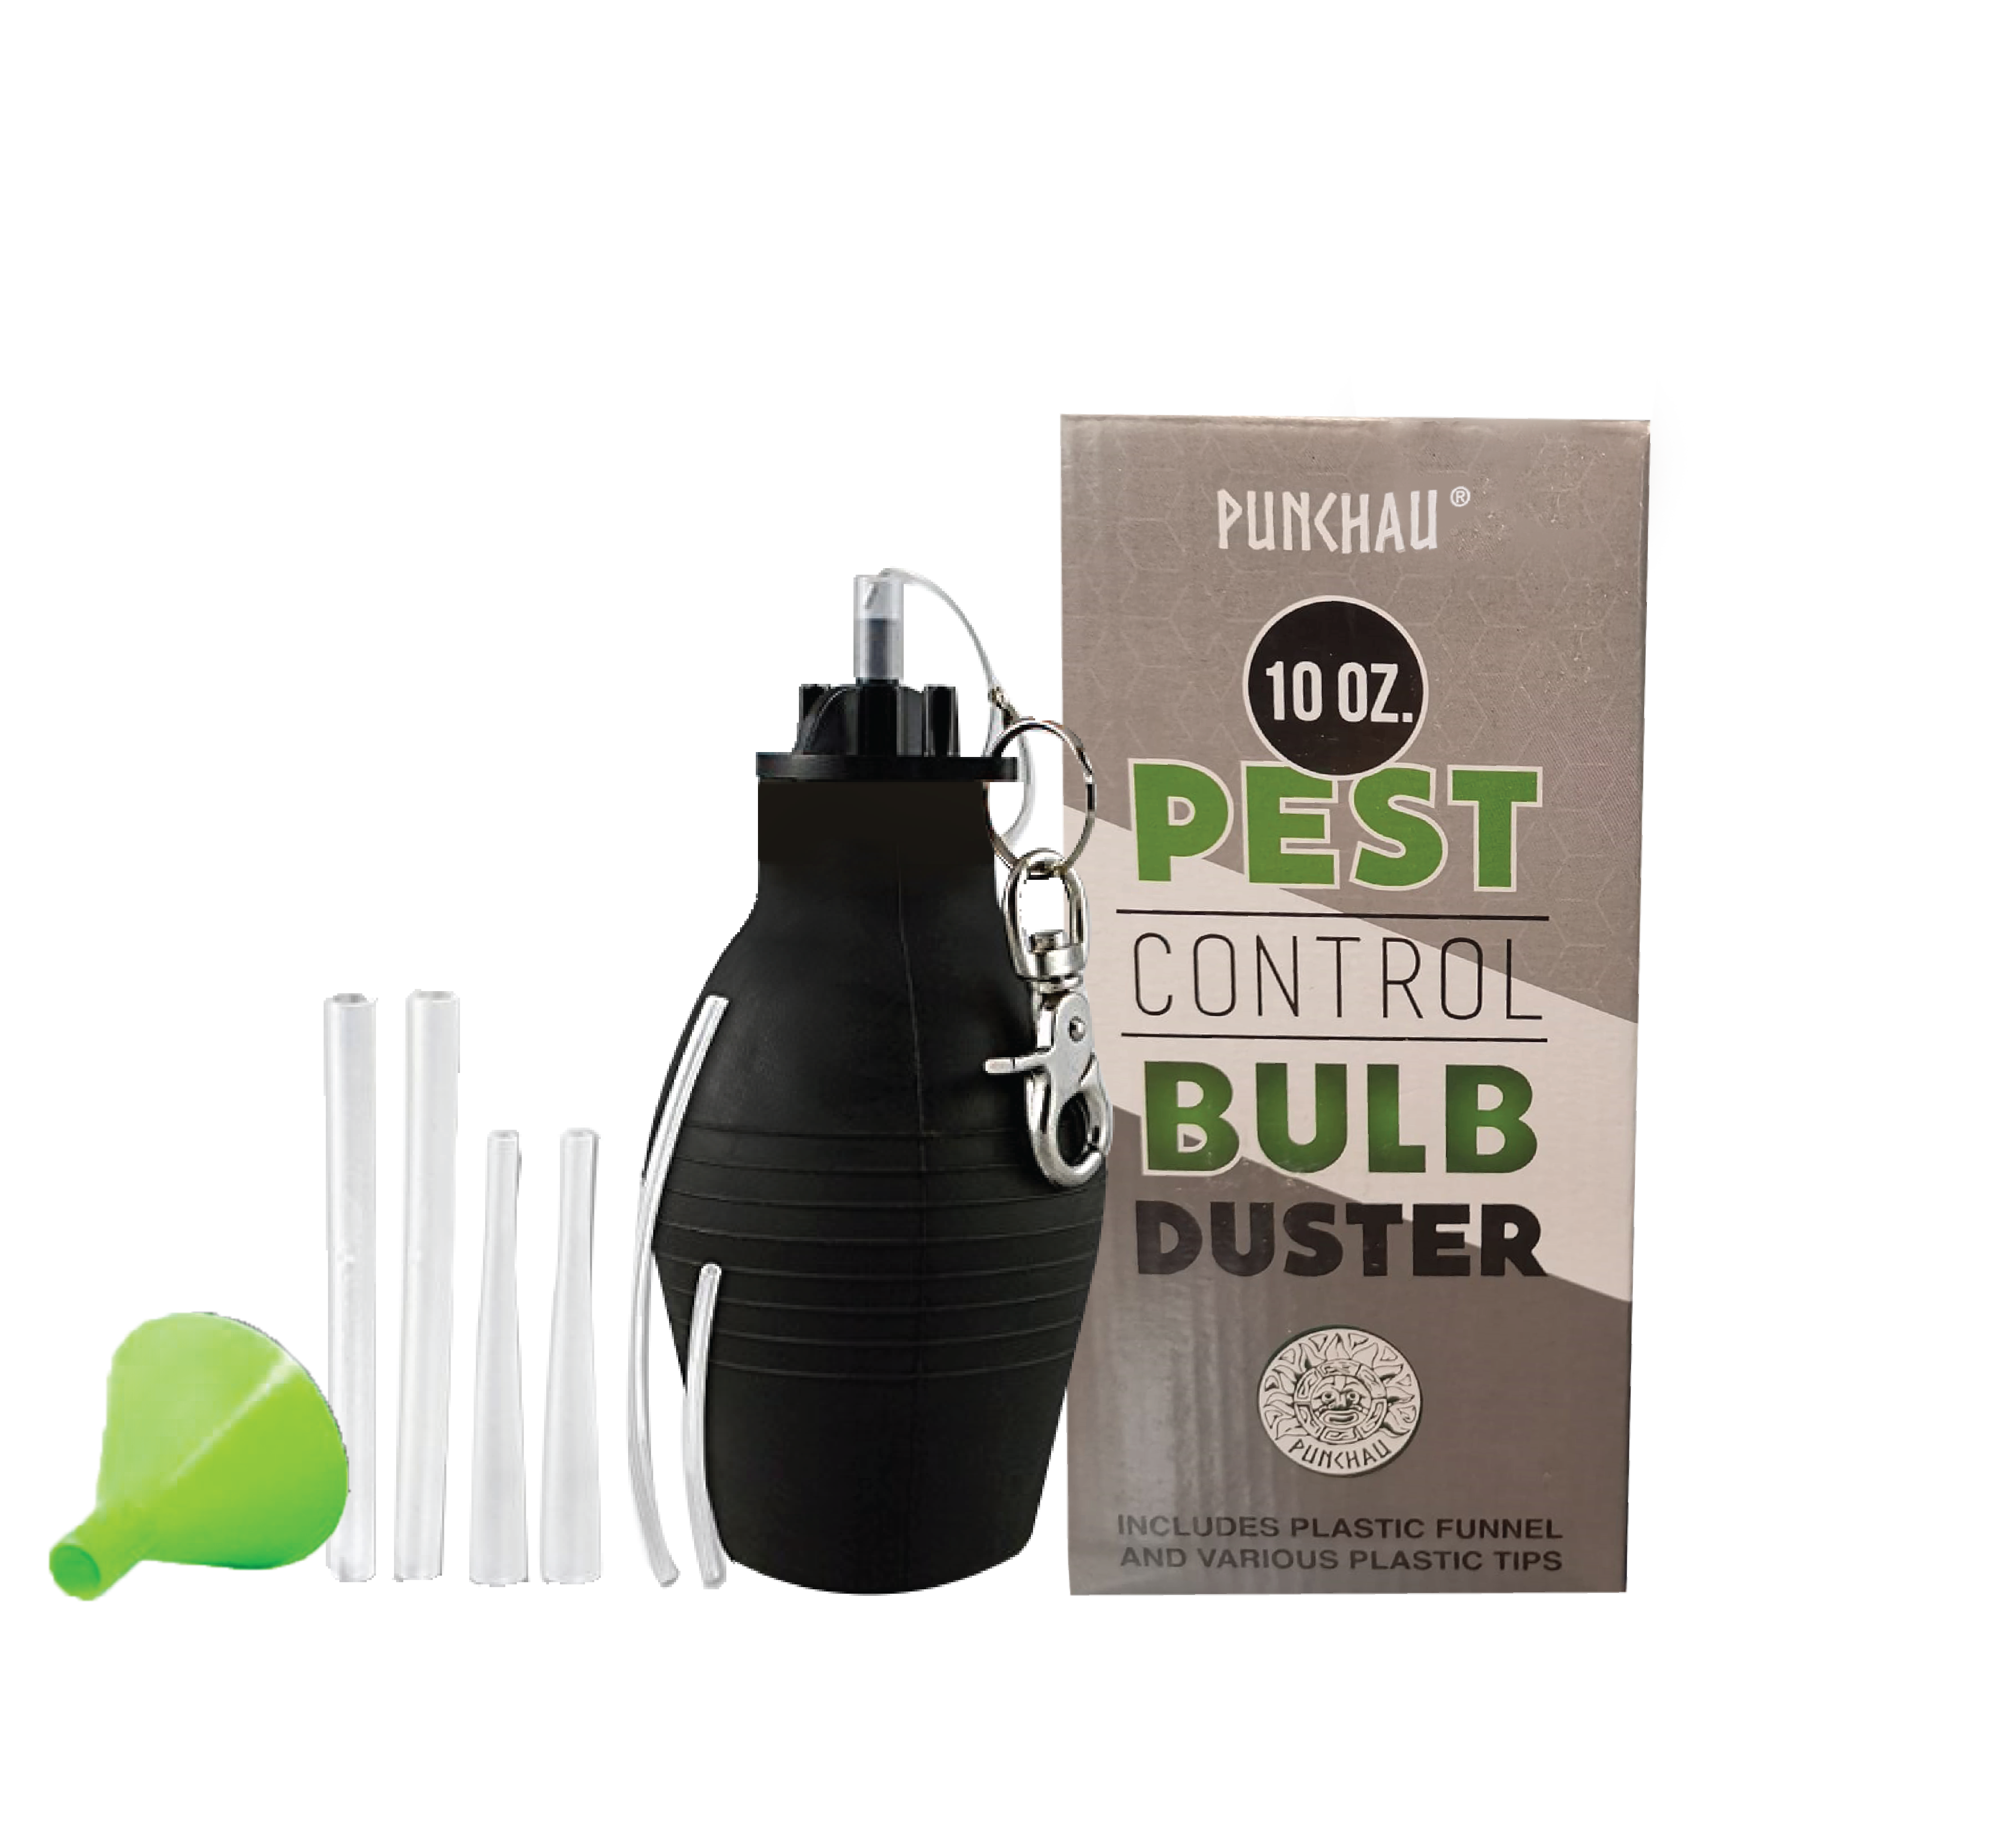 Pest Control Bulb Duster